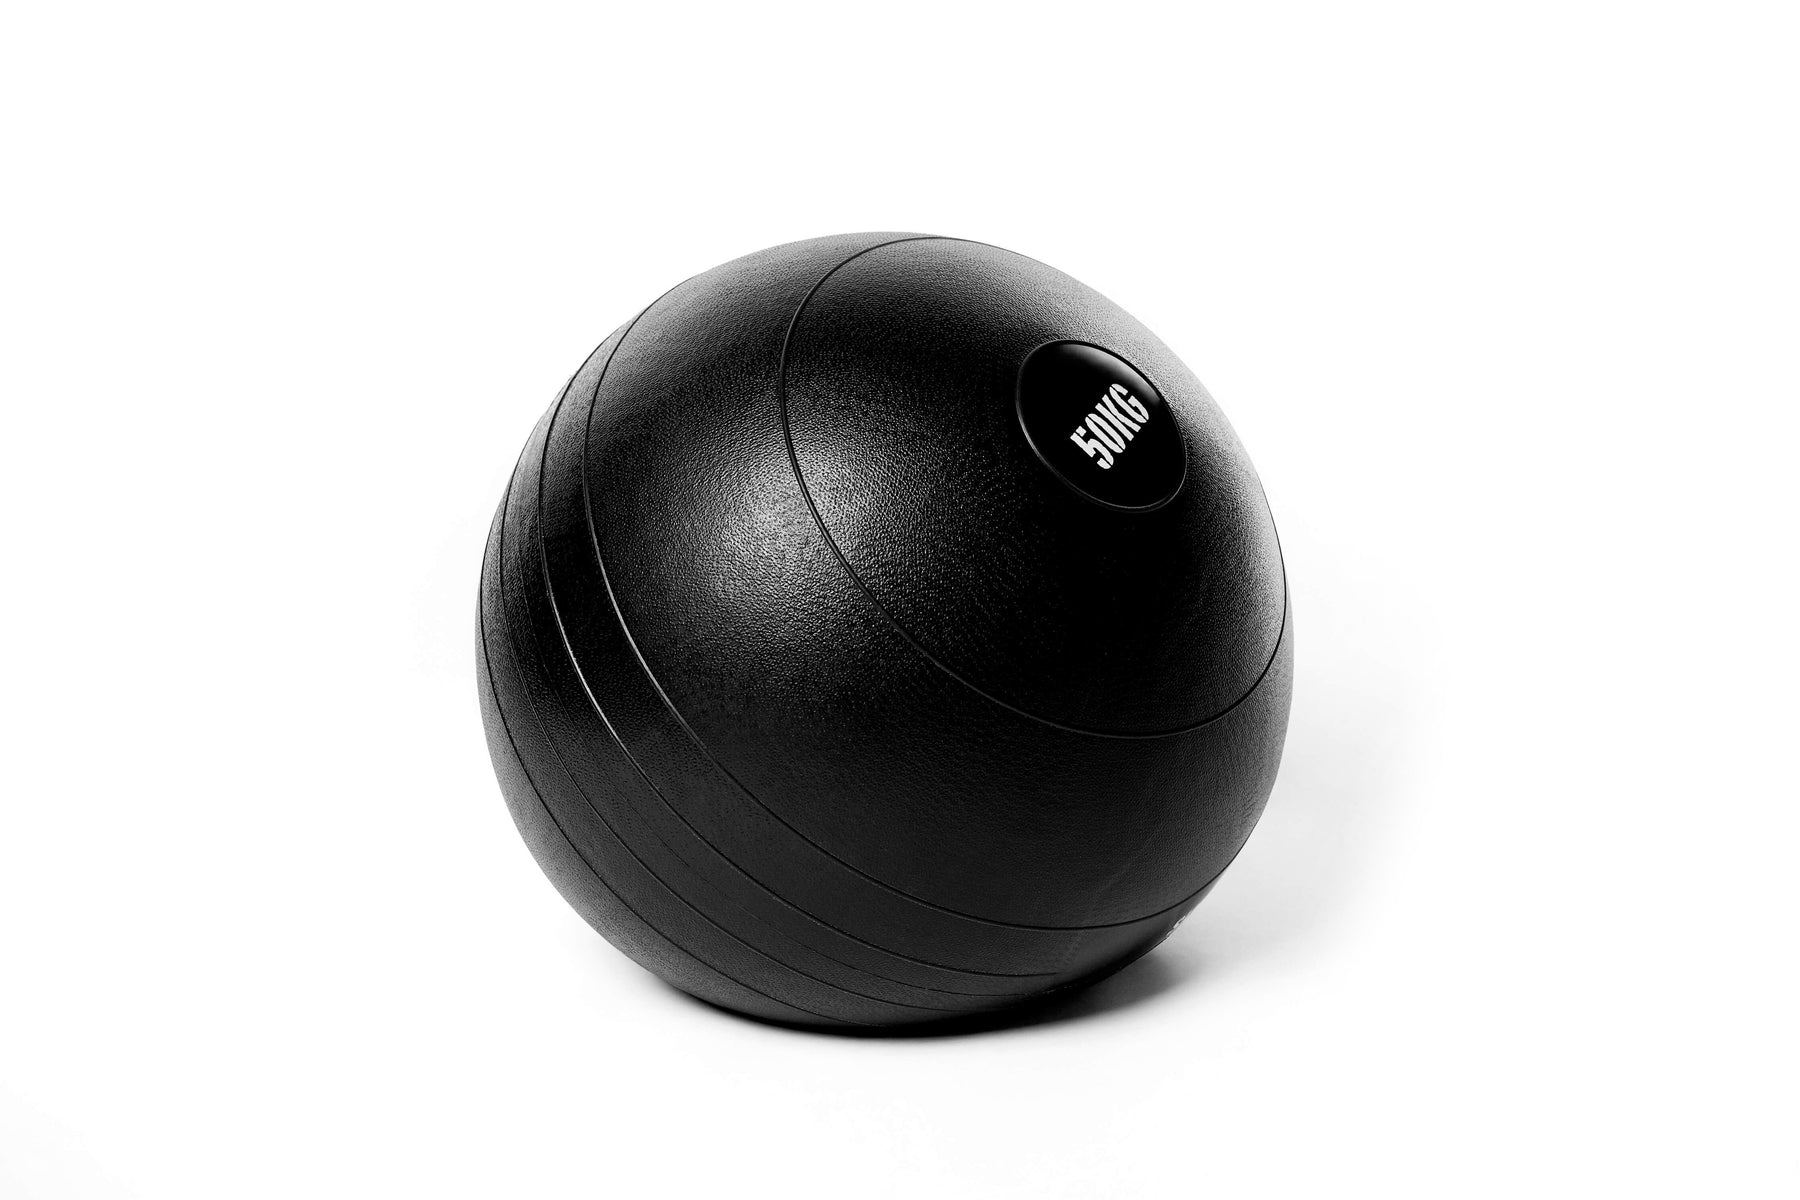 Balon Peso Pelota Medicinal Con Agarre 3kg Gym Ball Crossfit